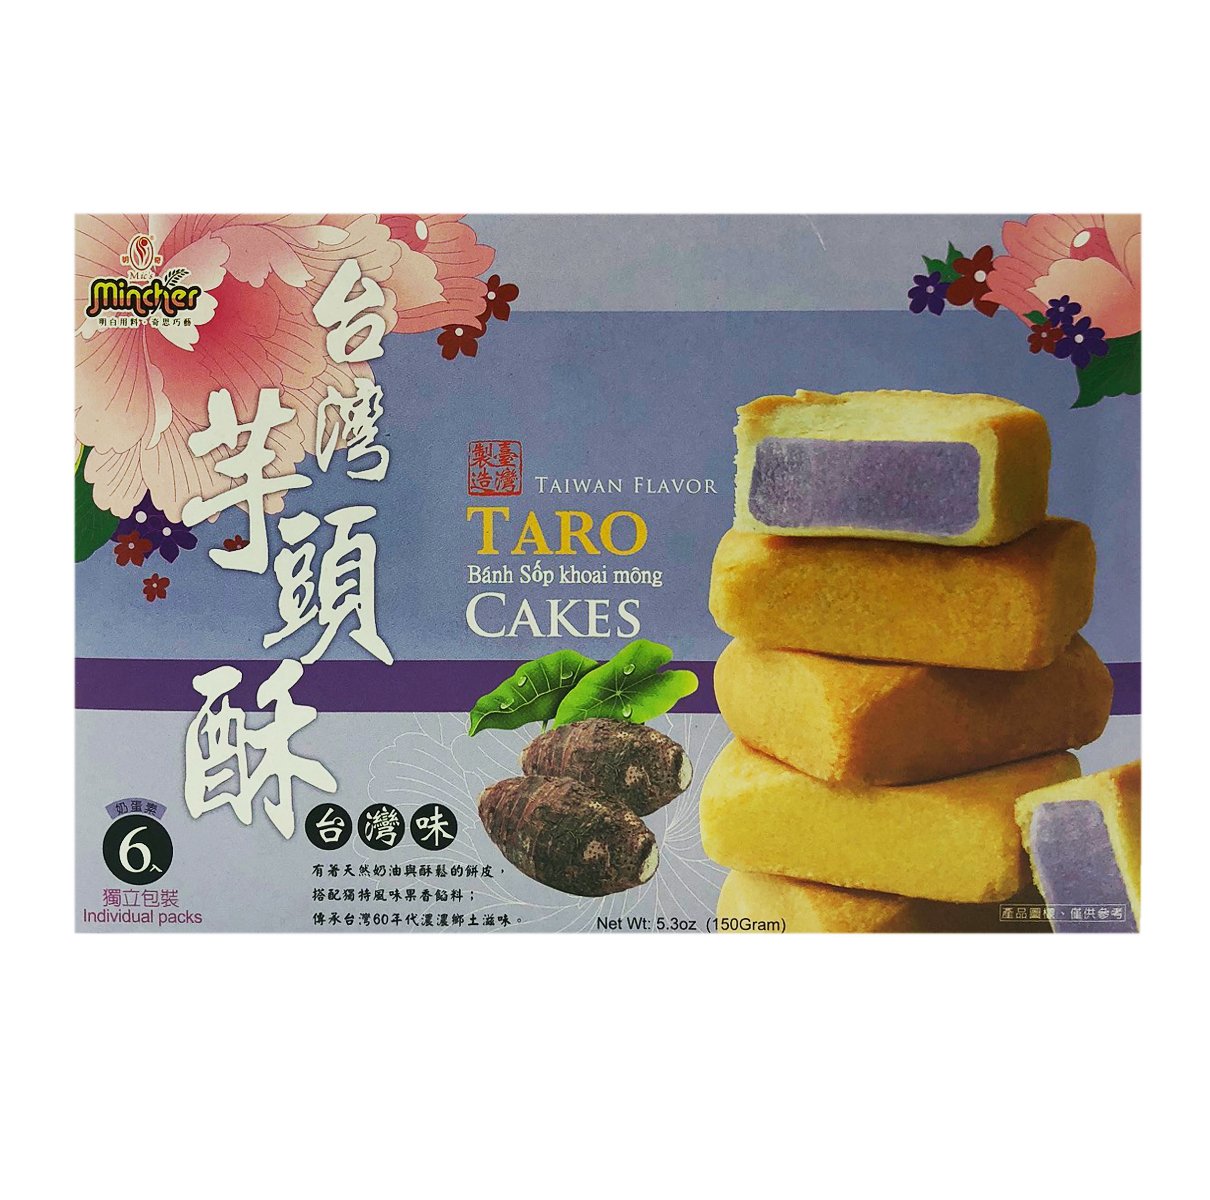 Mincher Banh Sop Khoai Mong Taiwan Flavor Cakes 5.3oz (Taro Cake)